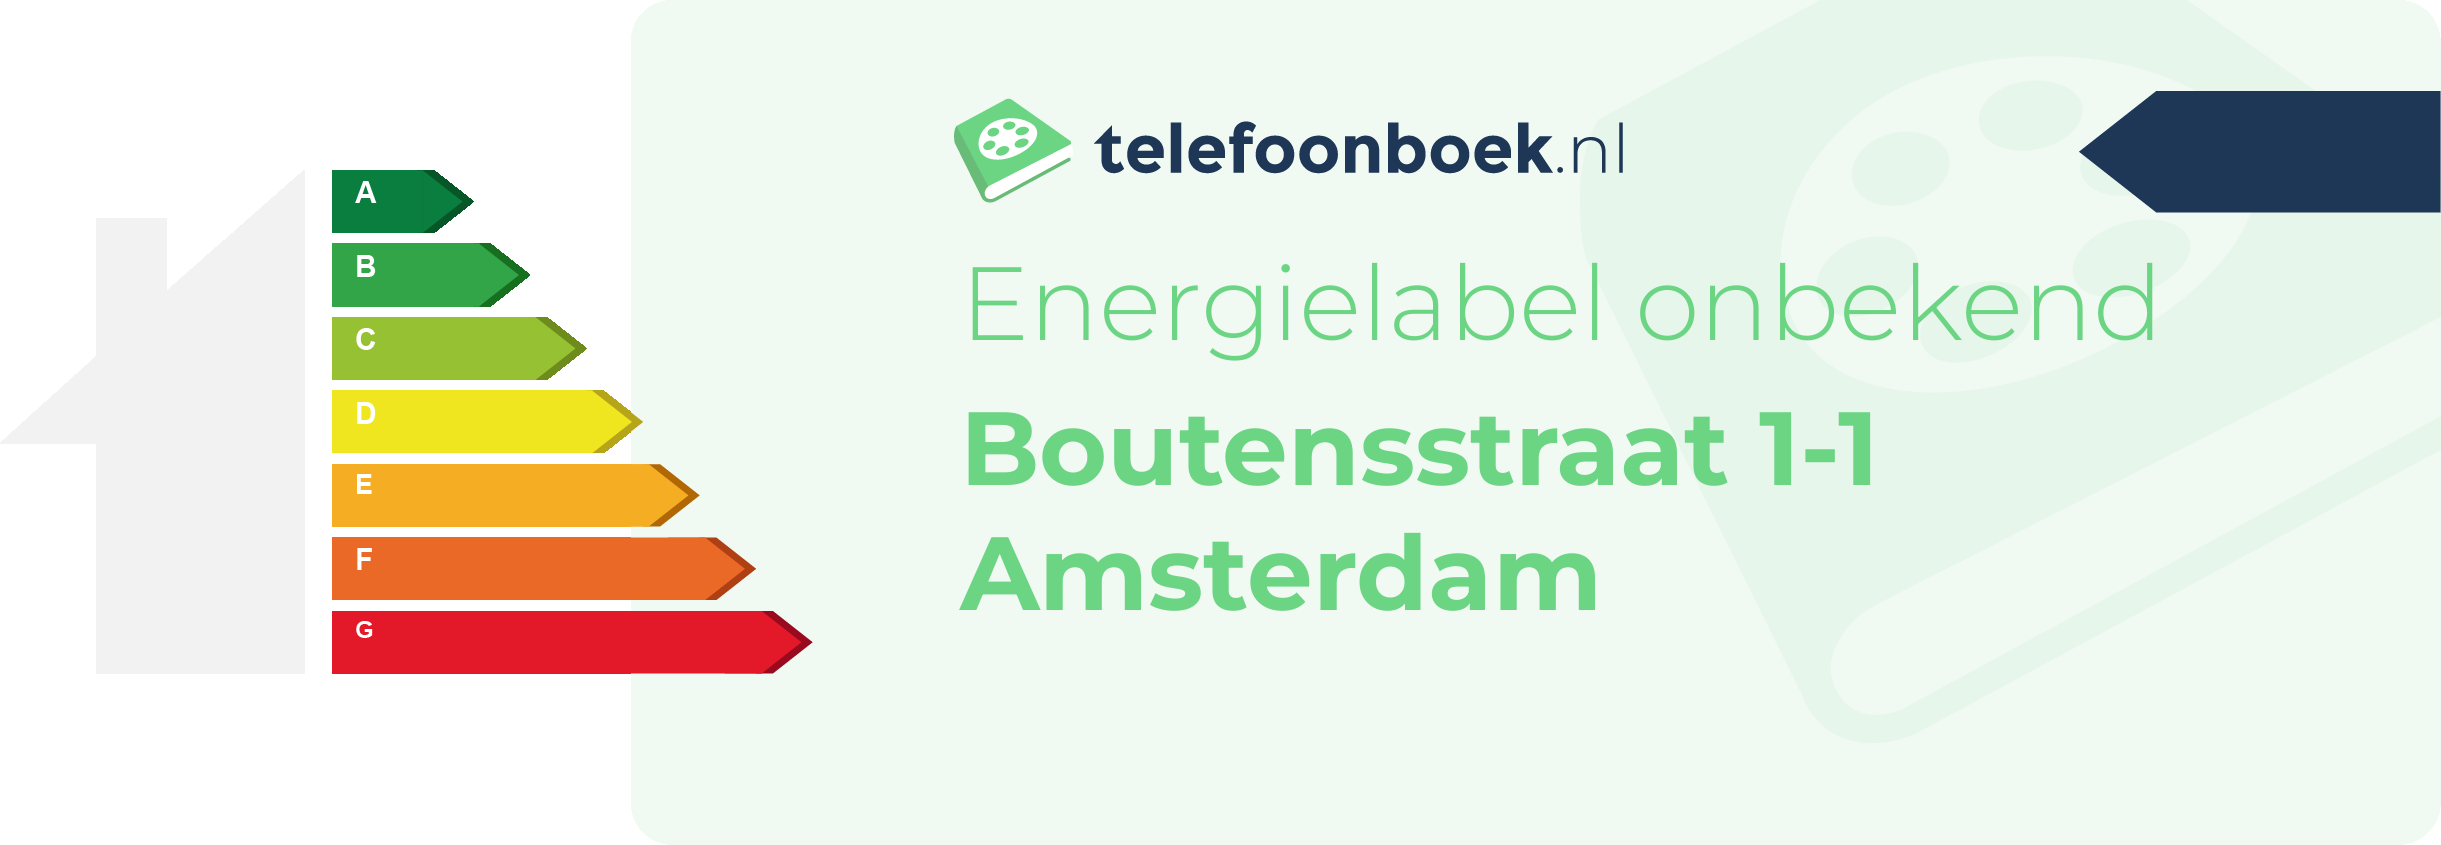 Energielabel Boutensstraat 1-1 Amsterdam